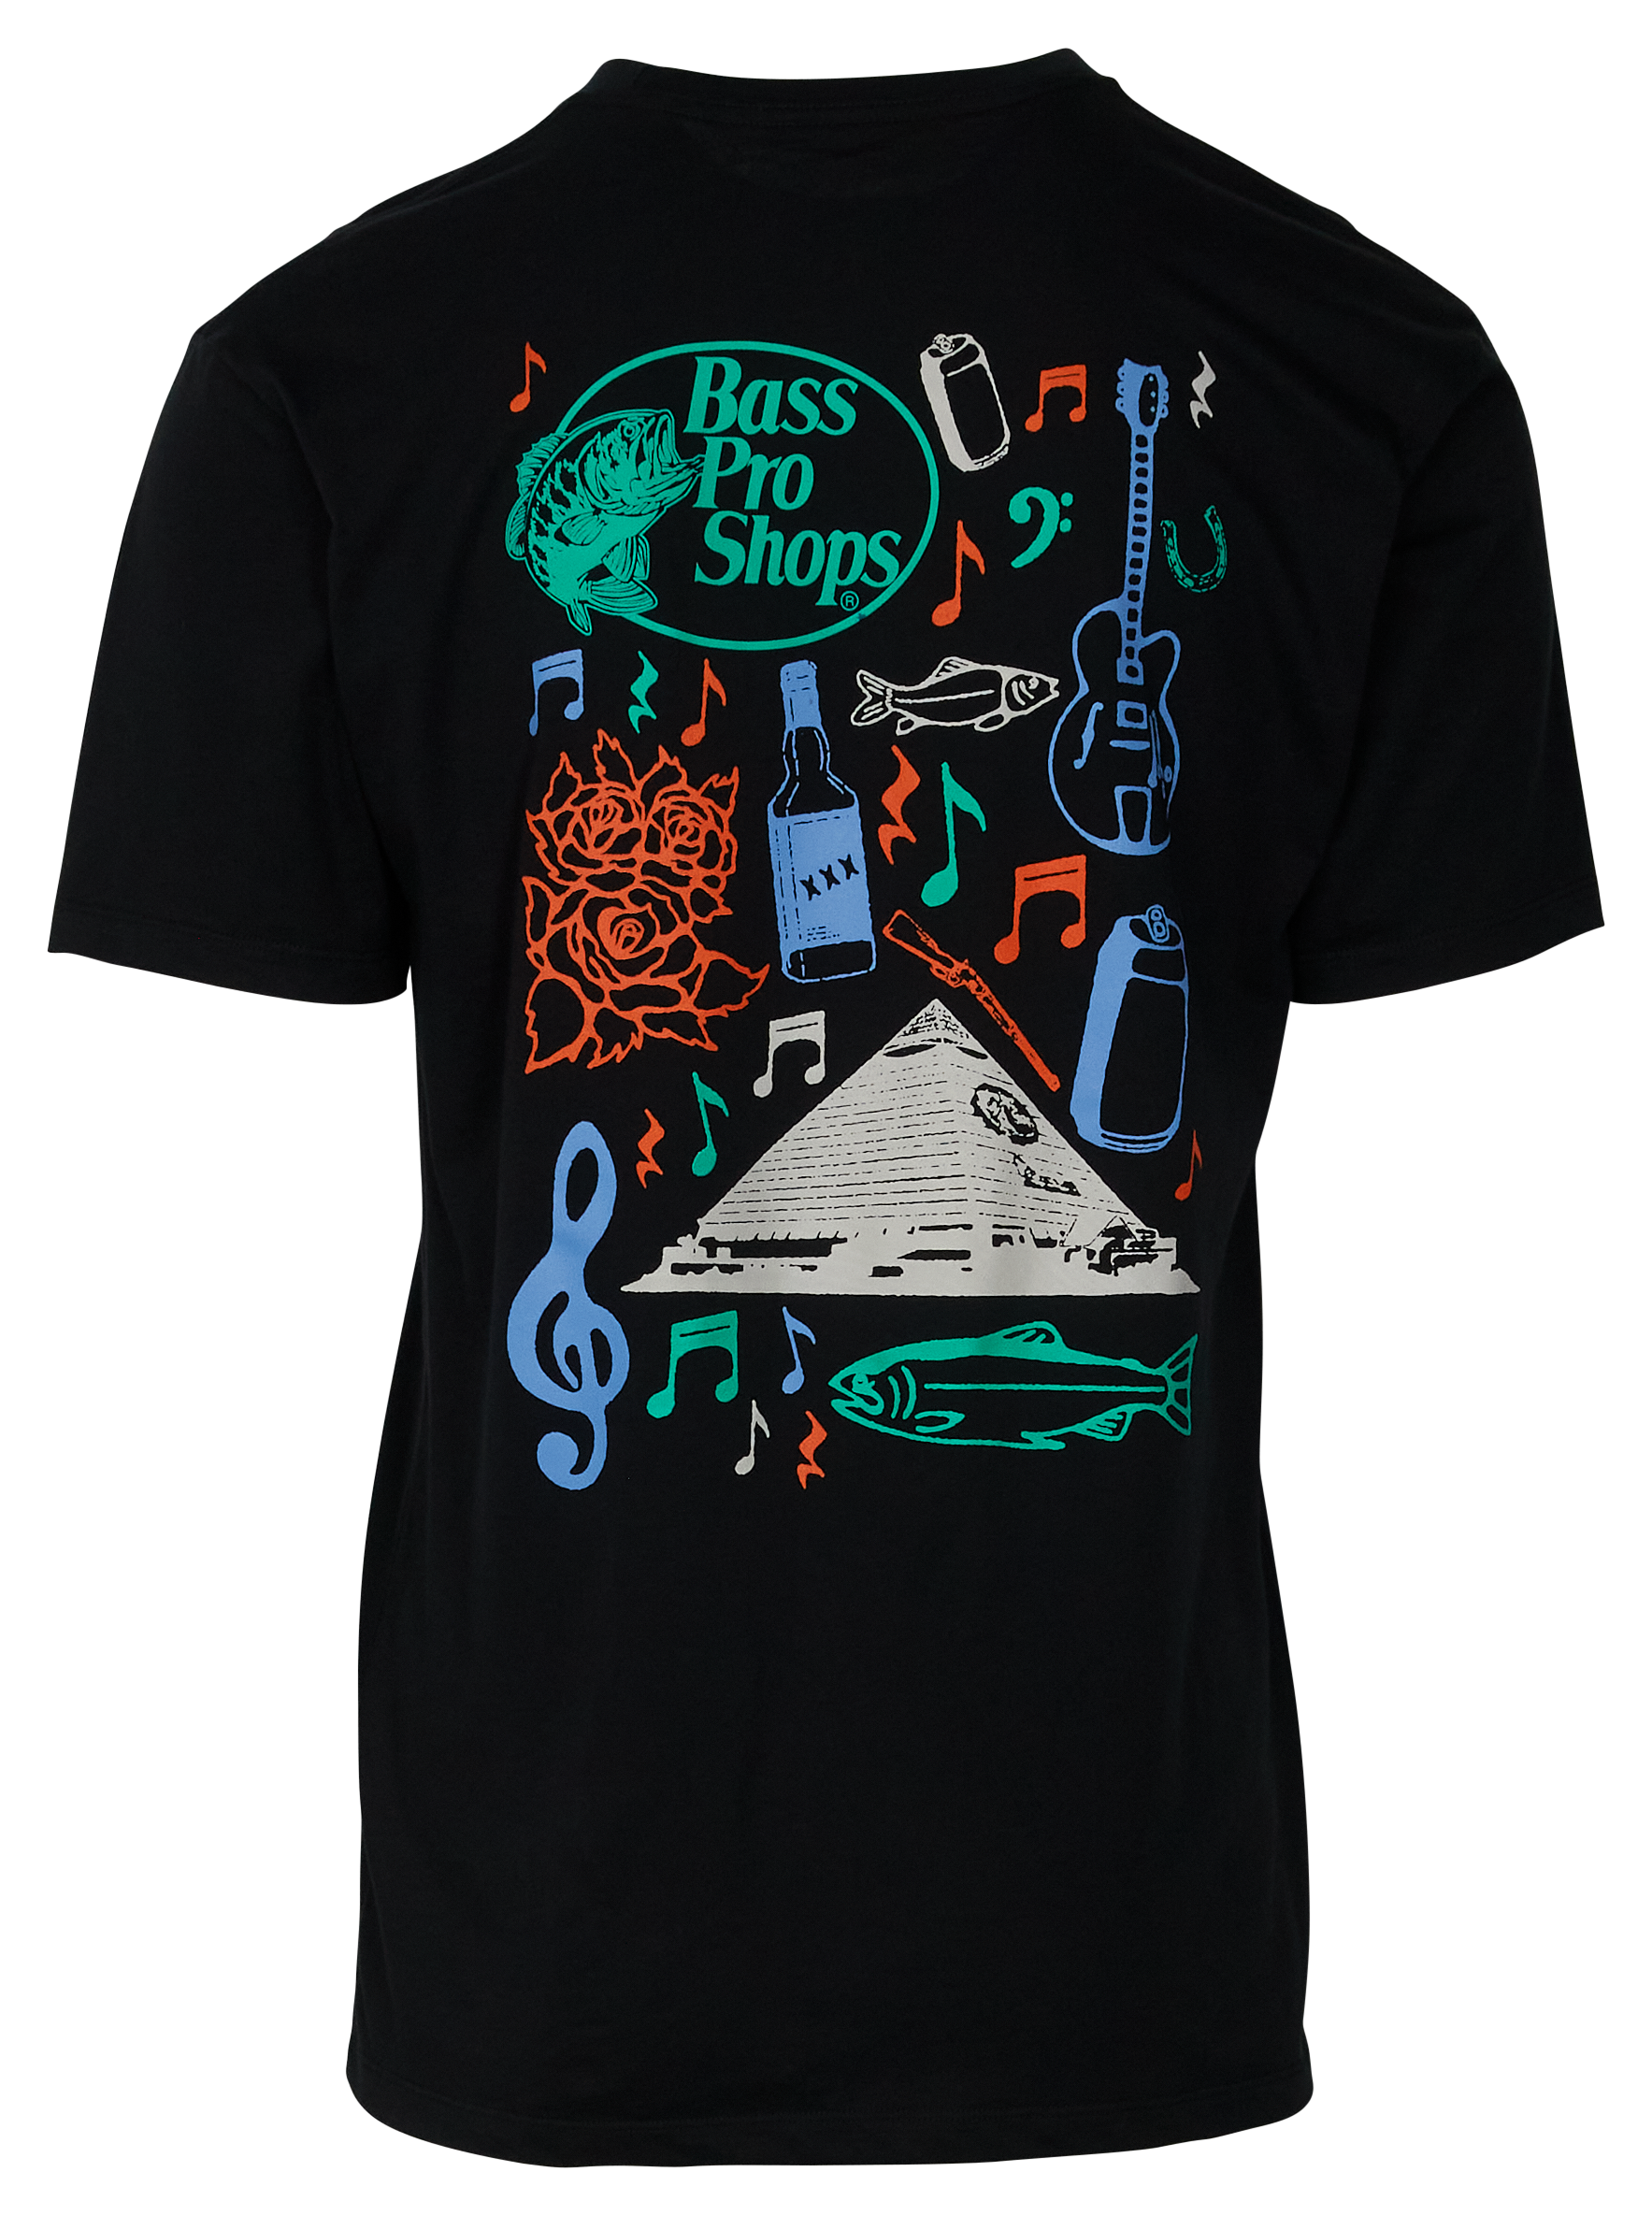 Bass Pro Shops Memphis Icons Short-Sleeve T-Shirt for Men - Black - L